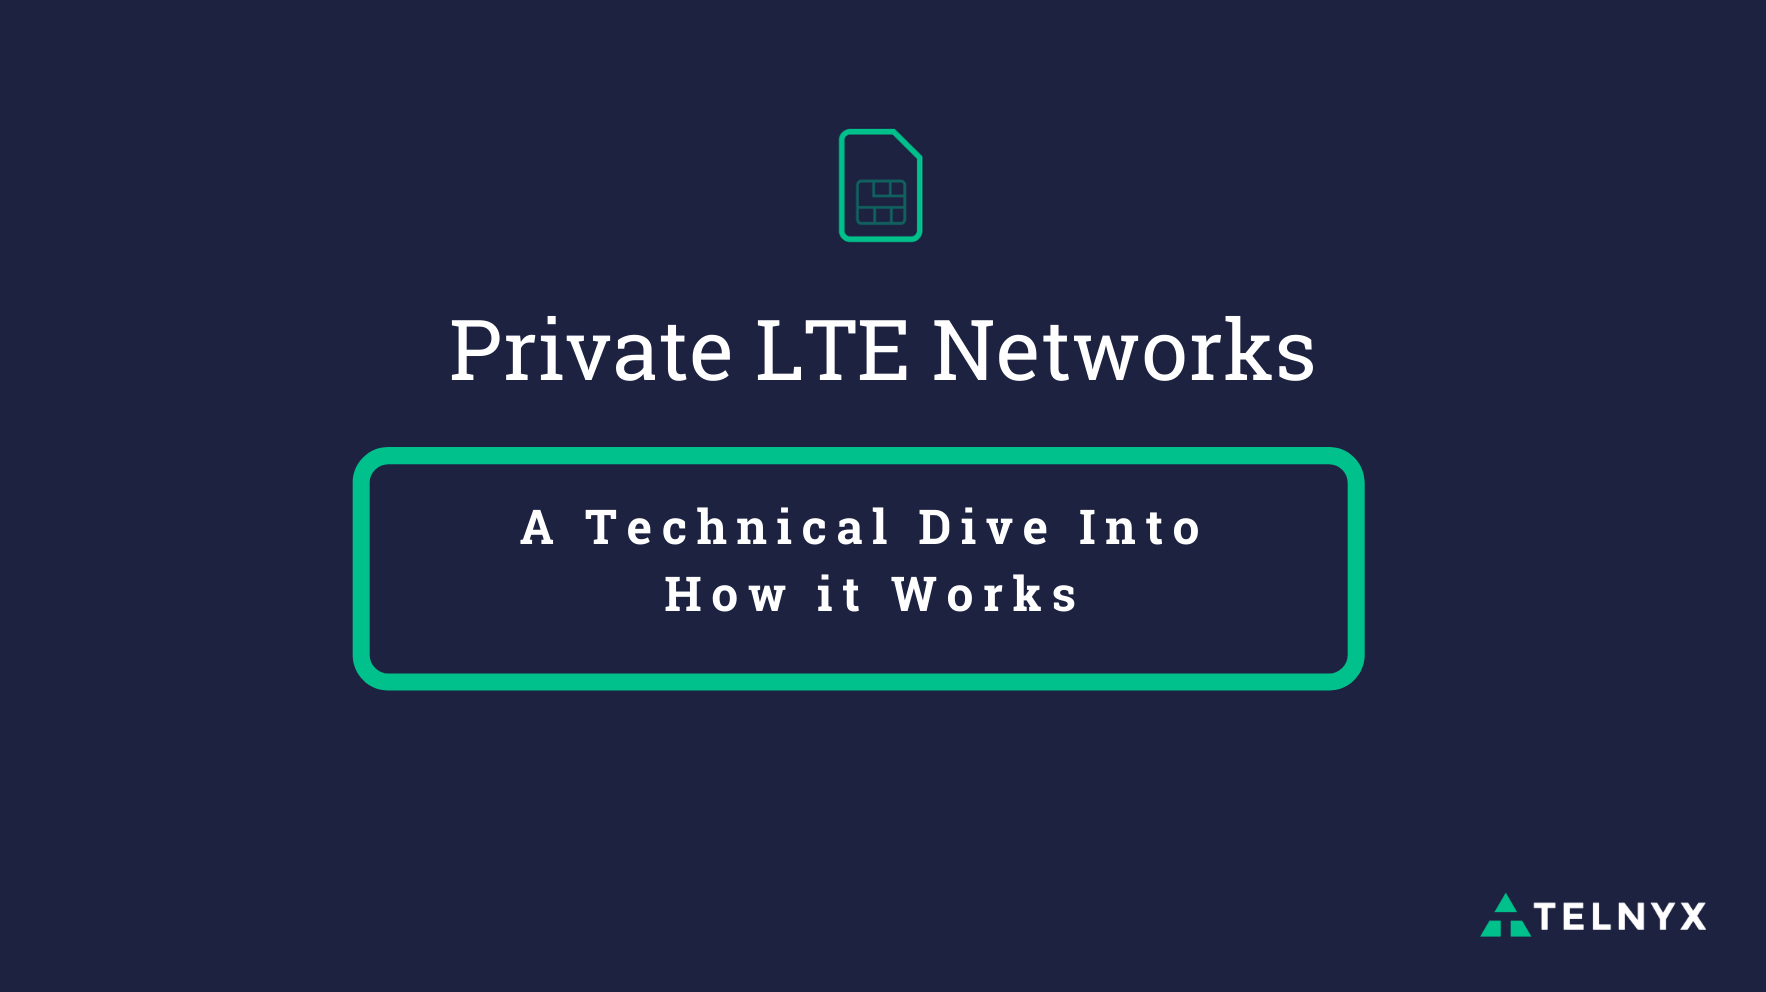 Telnyx Private LTE networks